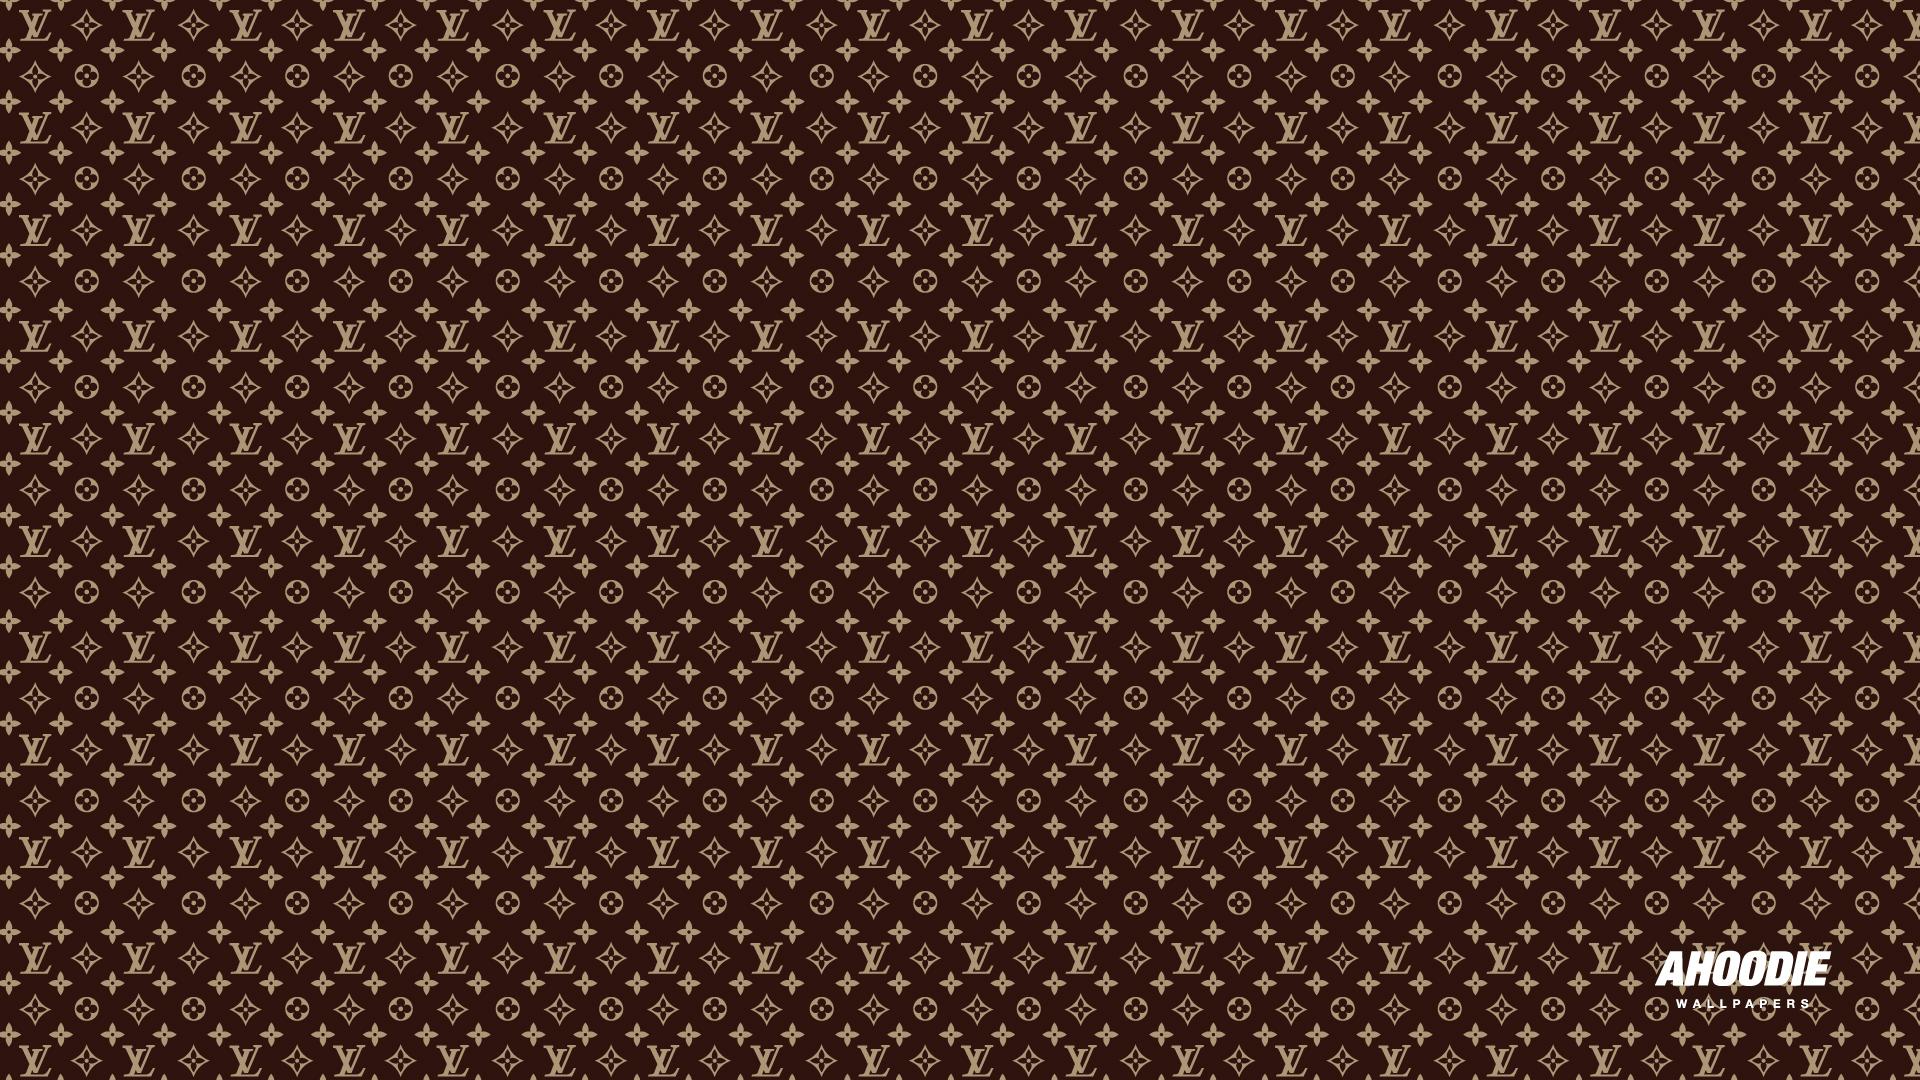 Louis vuitton iphone wallpaper, Louis vuitton pattern, Louis vuitton